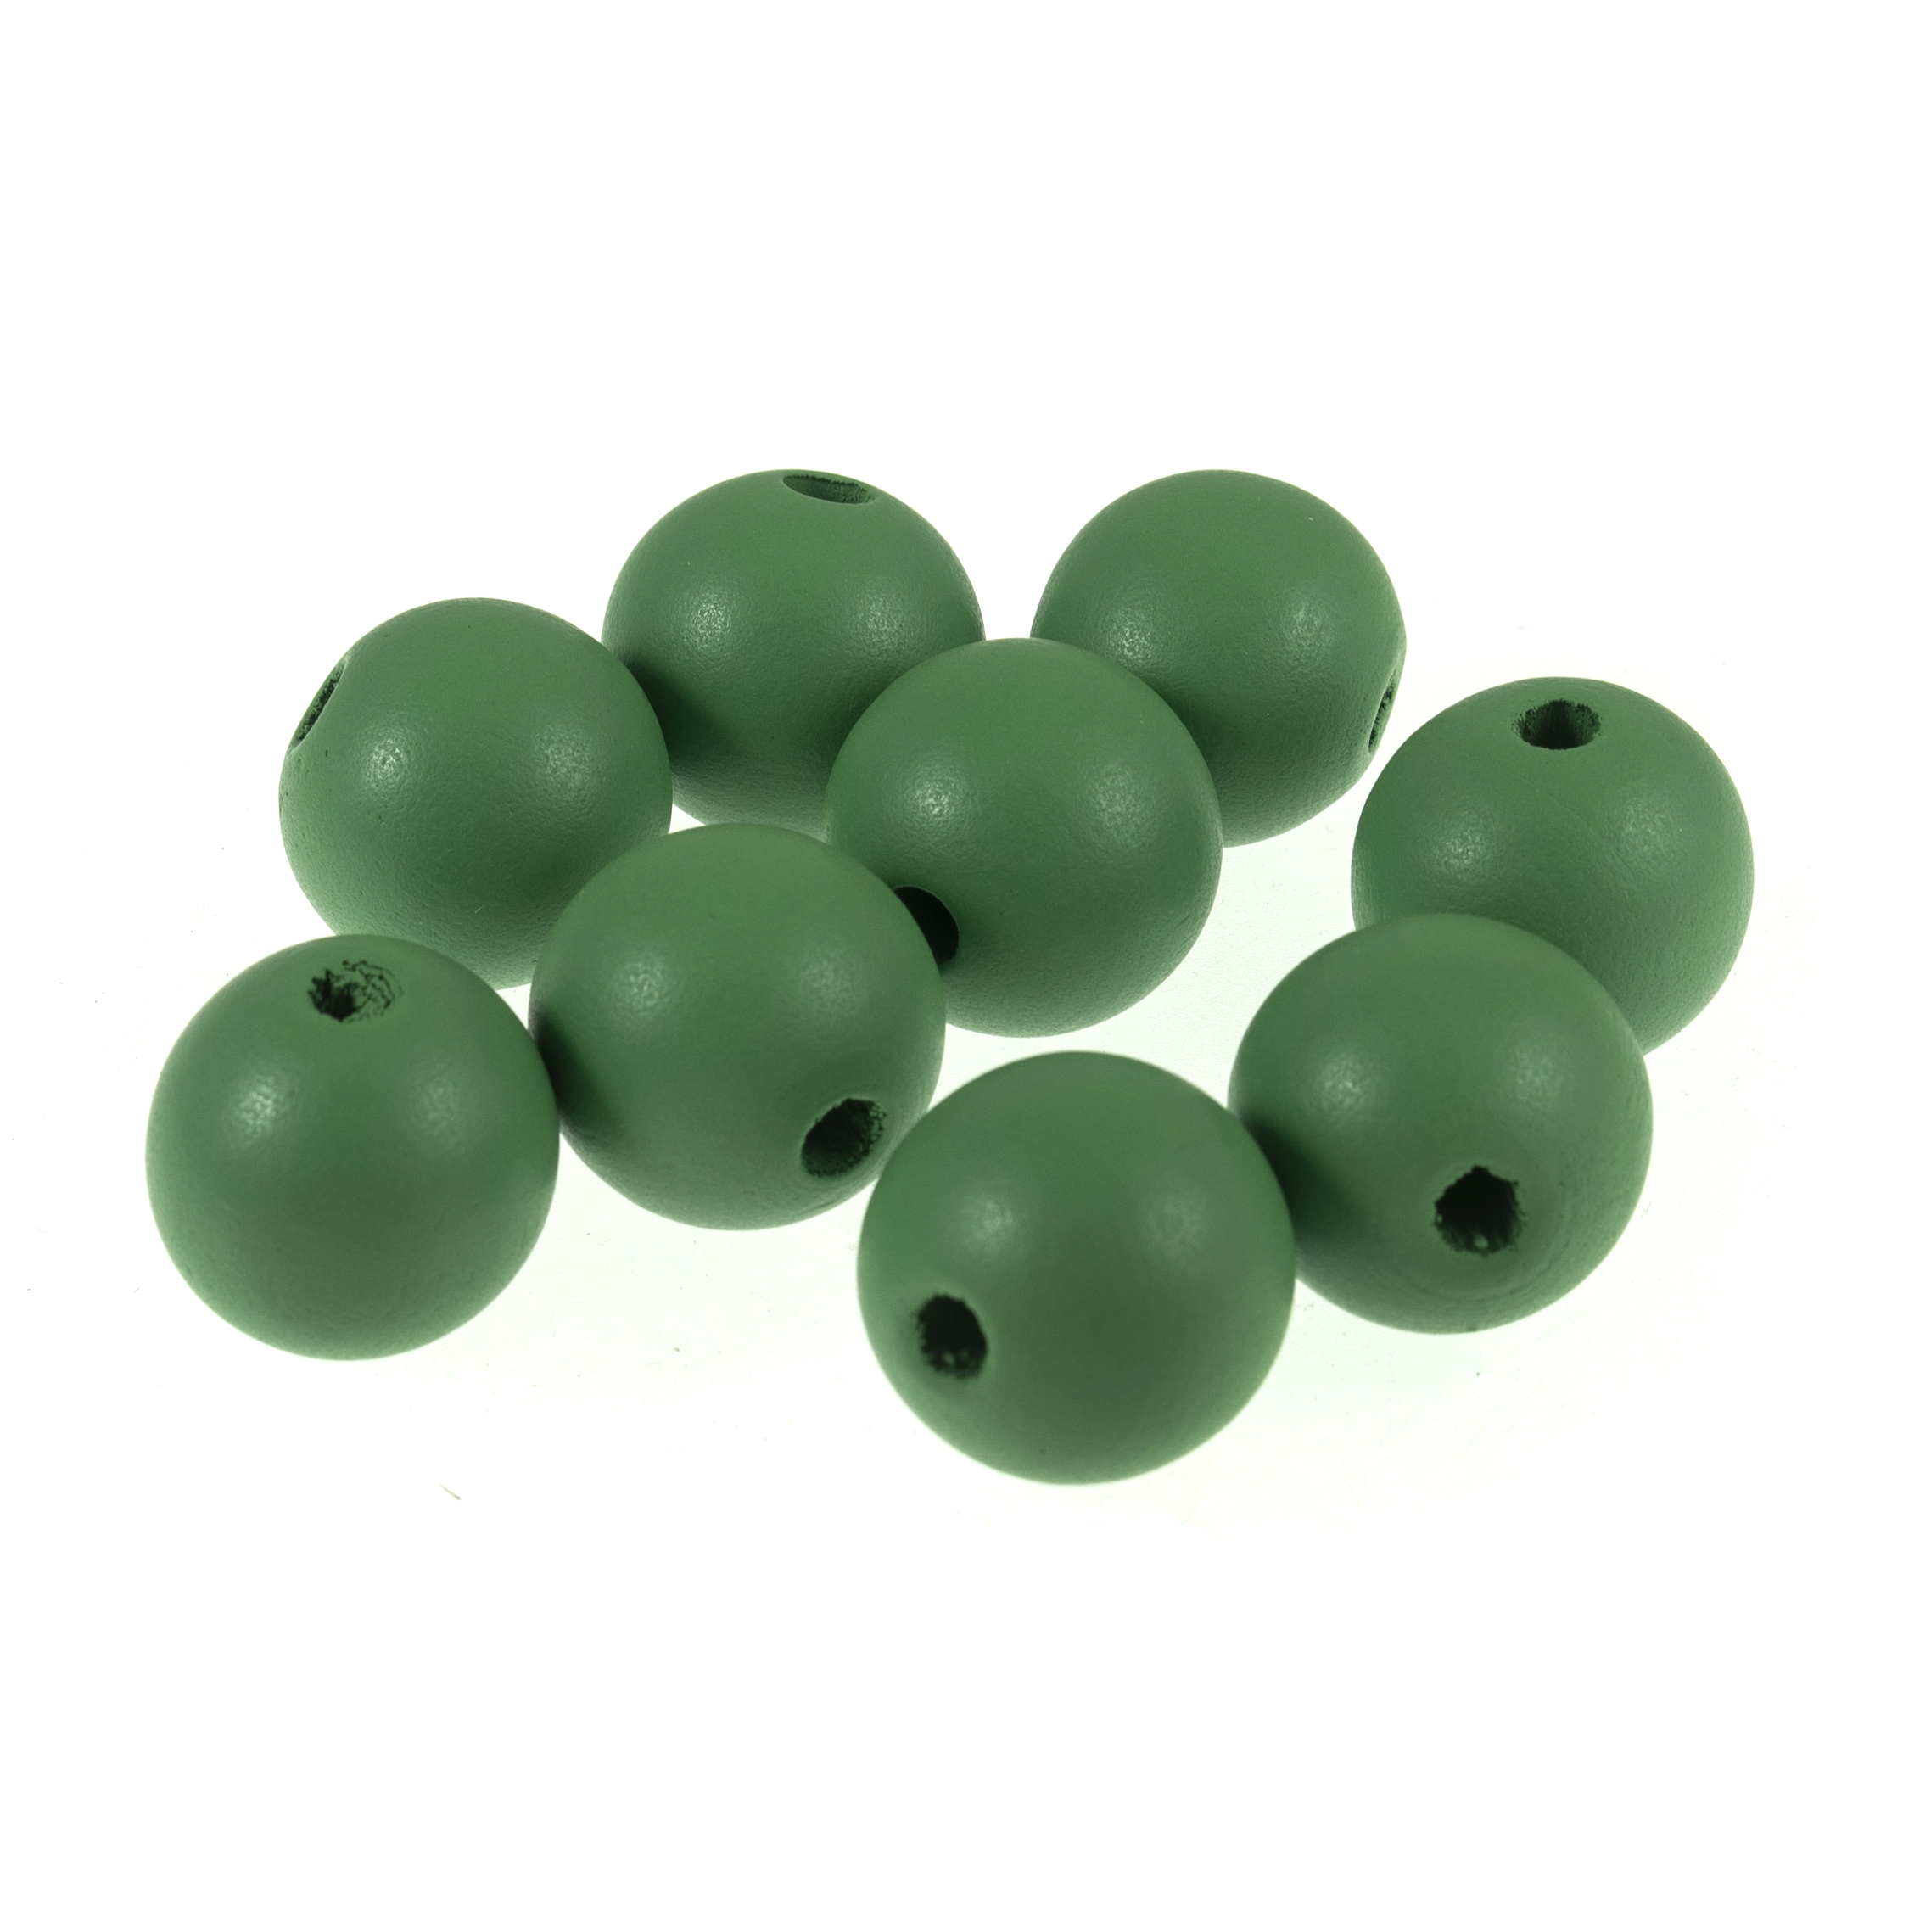 Wooden Craft Beads: Round: 2.5cm: Green: 9 Pieces - Trimits